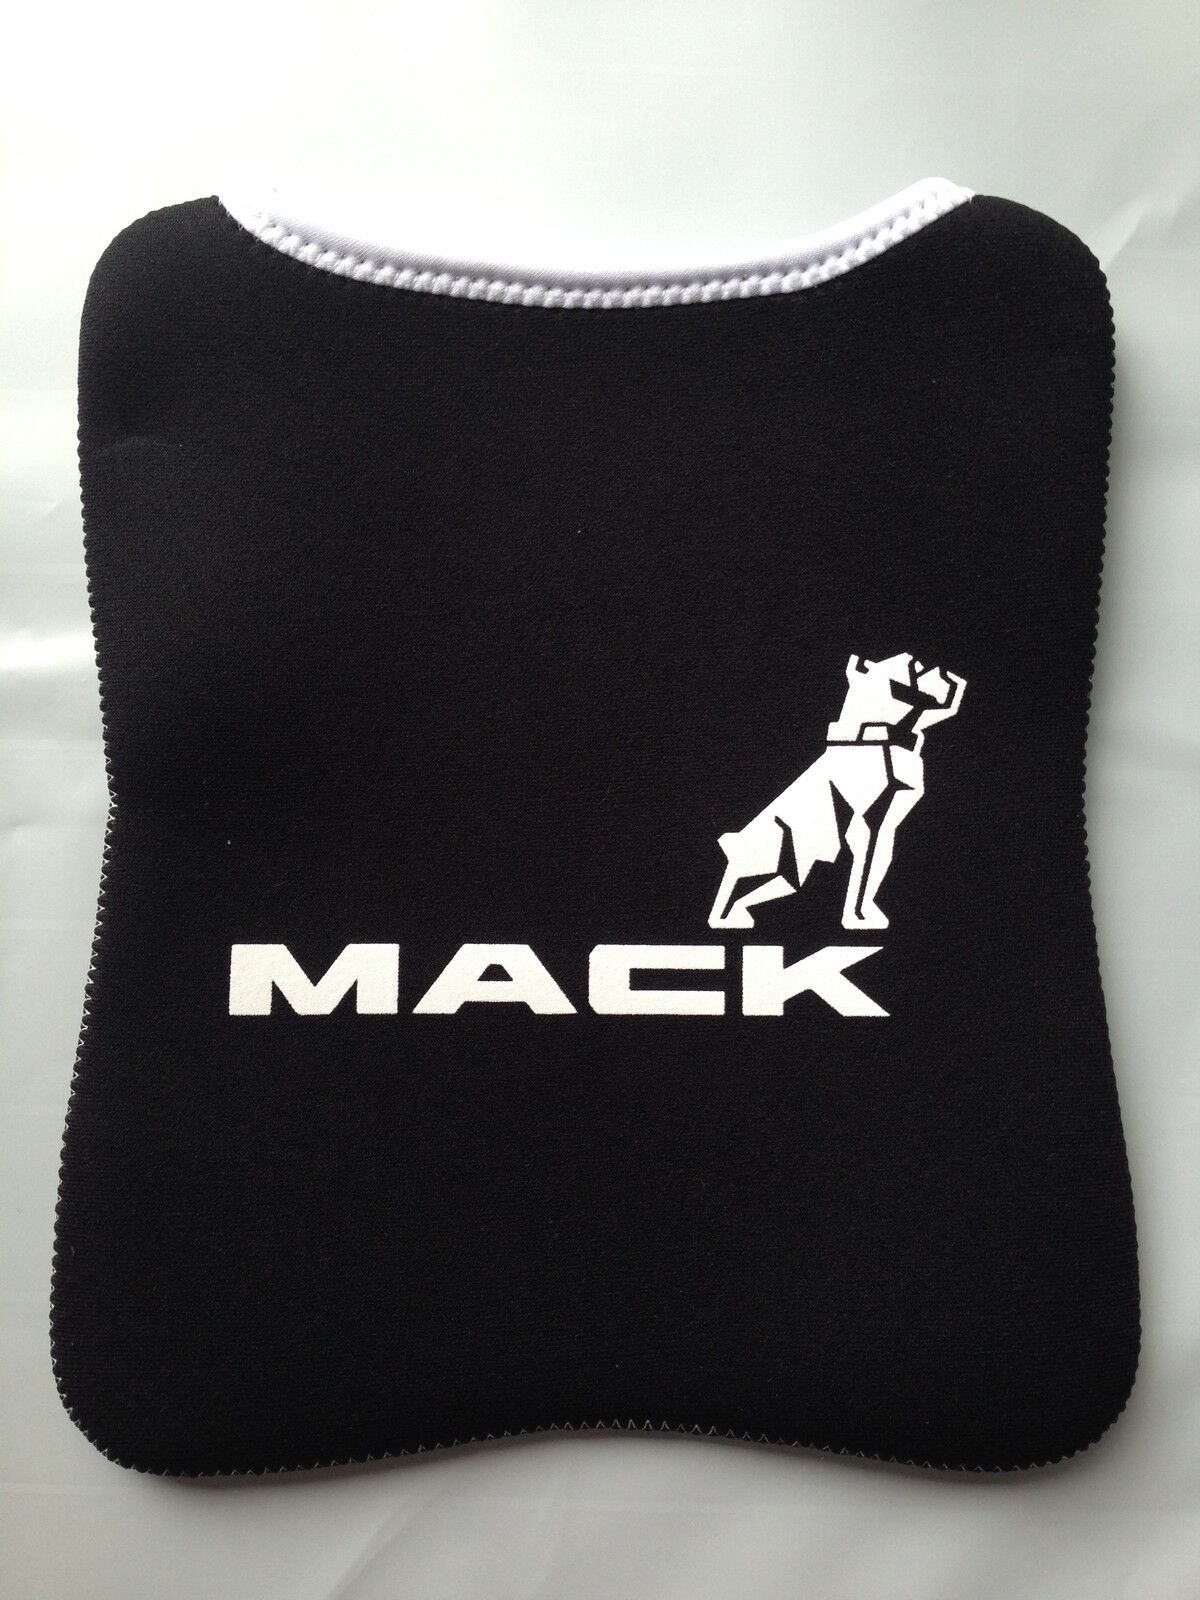 New Genuine Mack Merchandise Mack Bulldog Logo Black/White Ipad Neoprene Sleeve